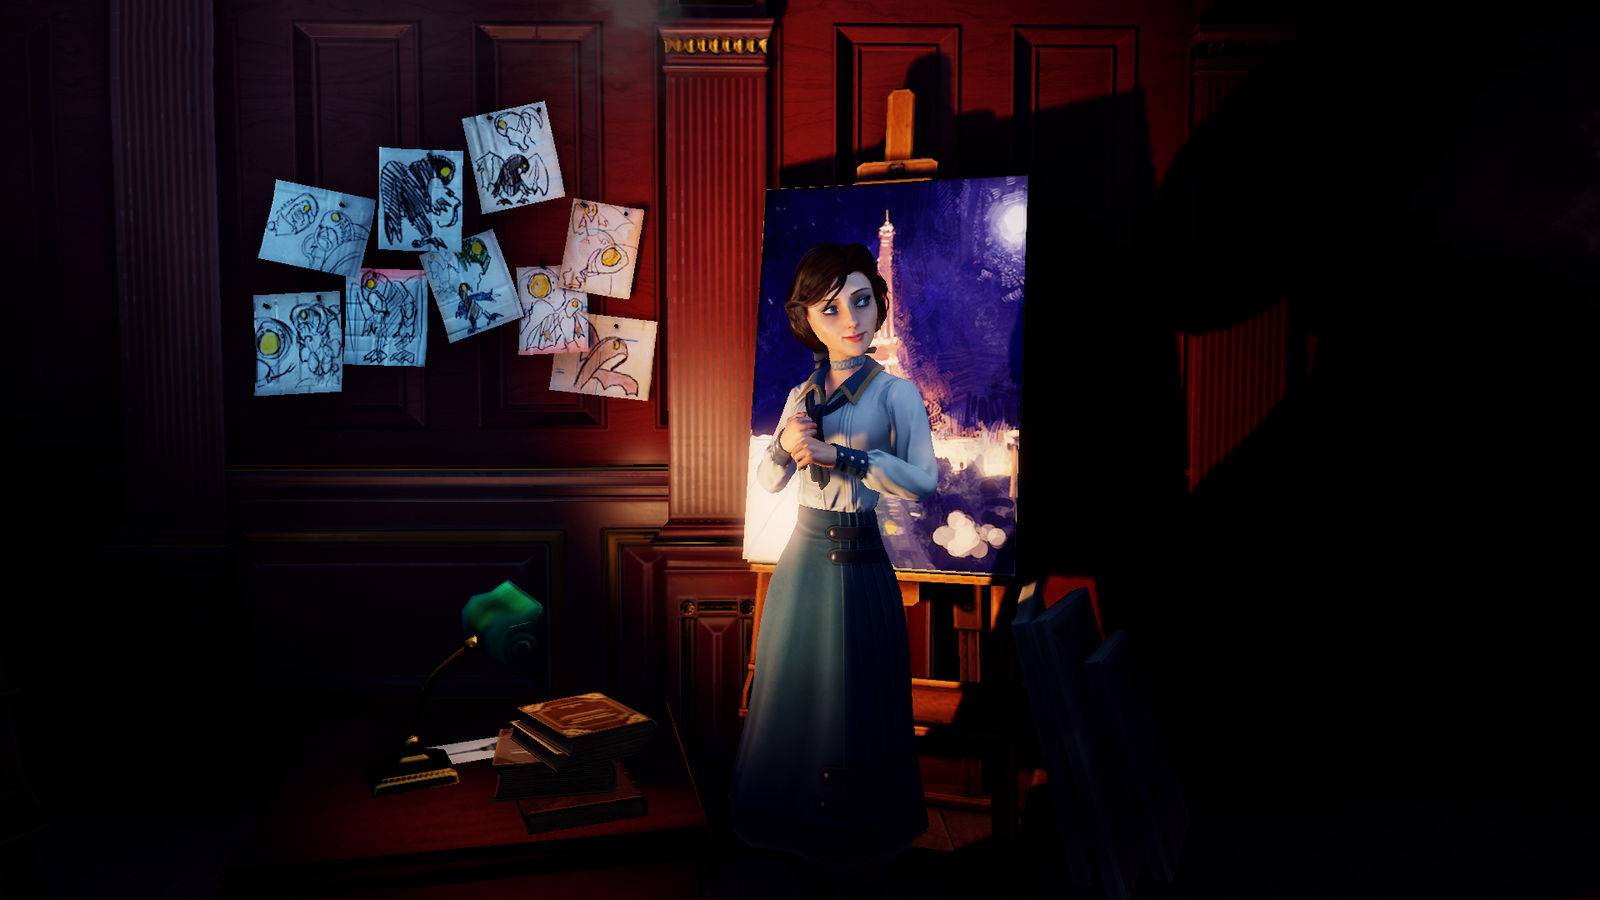 Meet Elizabeth: The heart and soul of 'BioShock Infinite